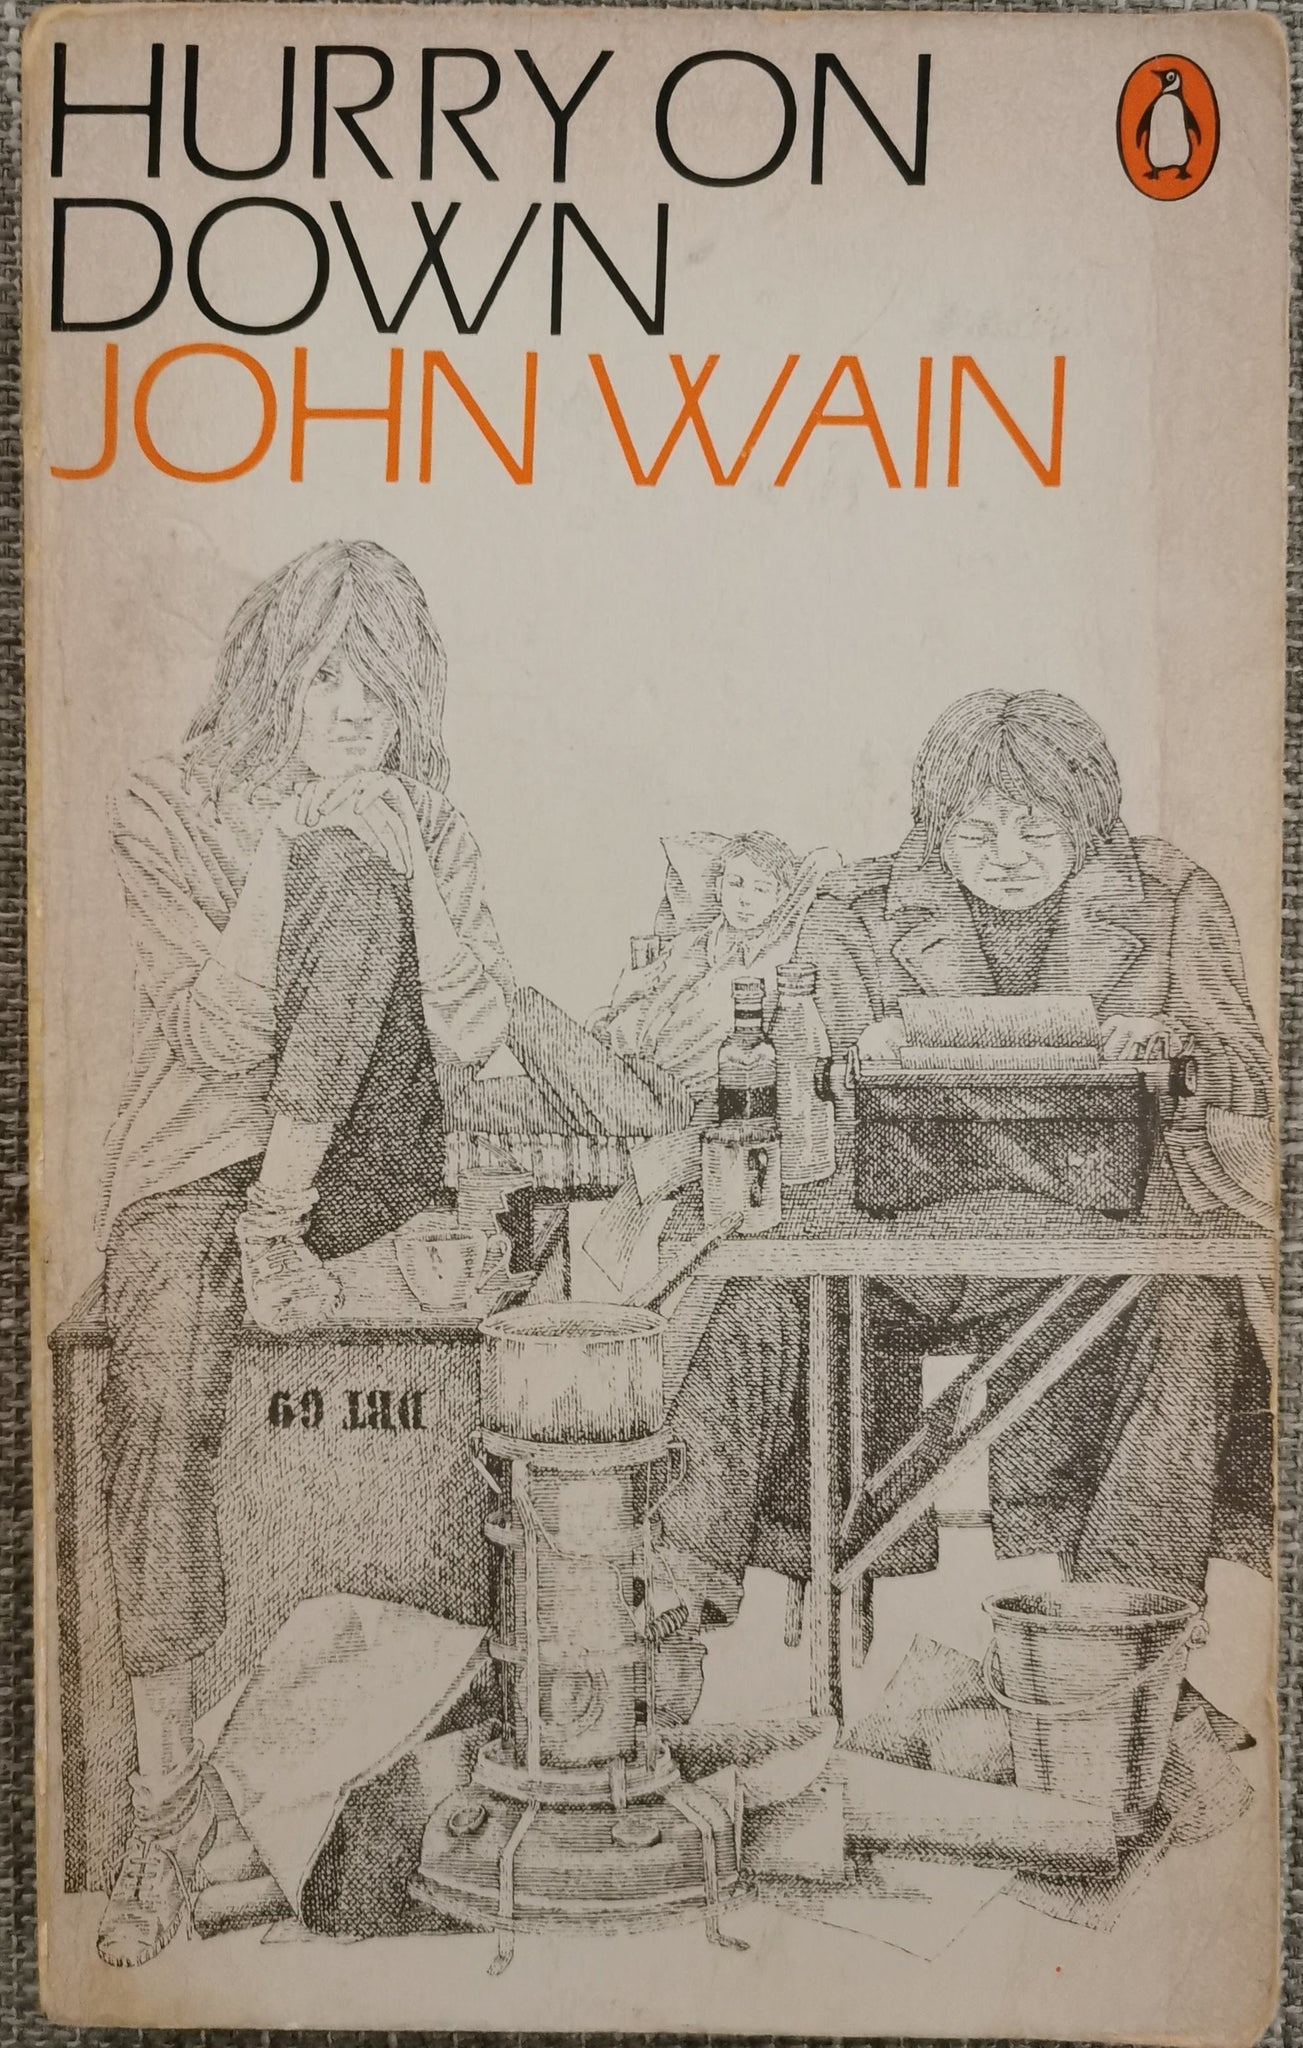 Hurry on Down by John Wain